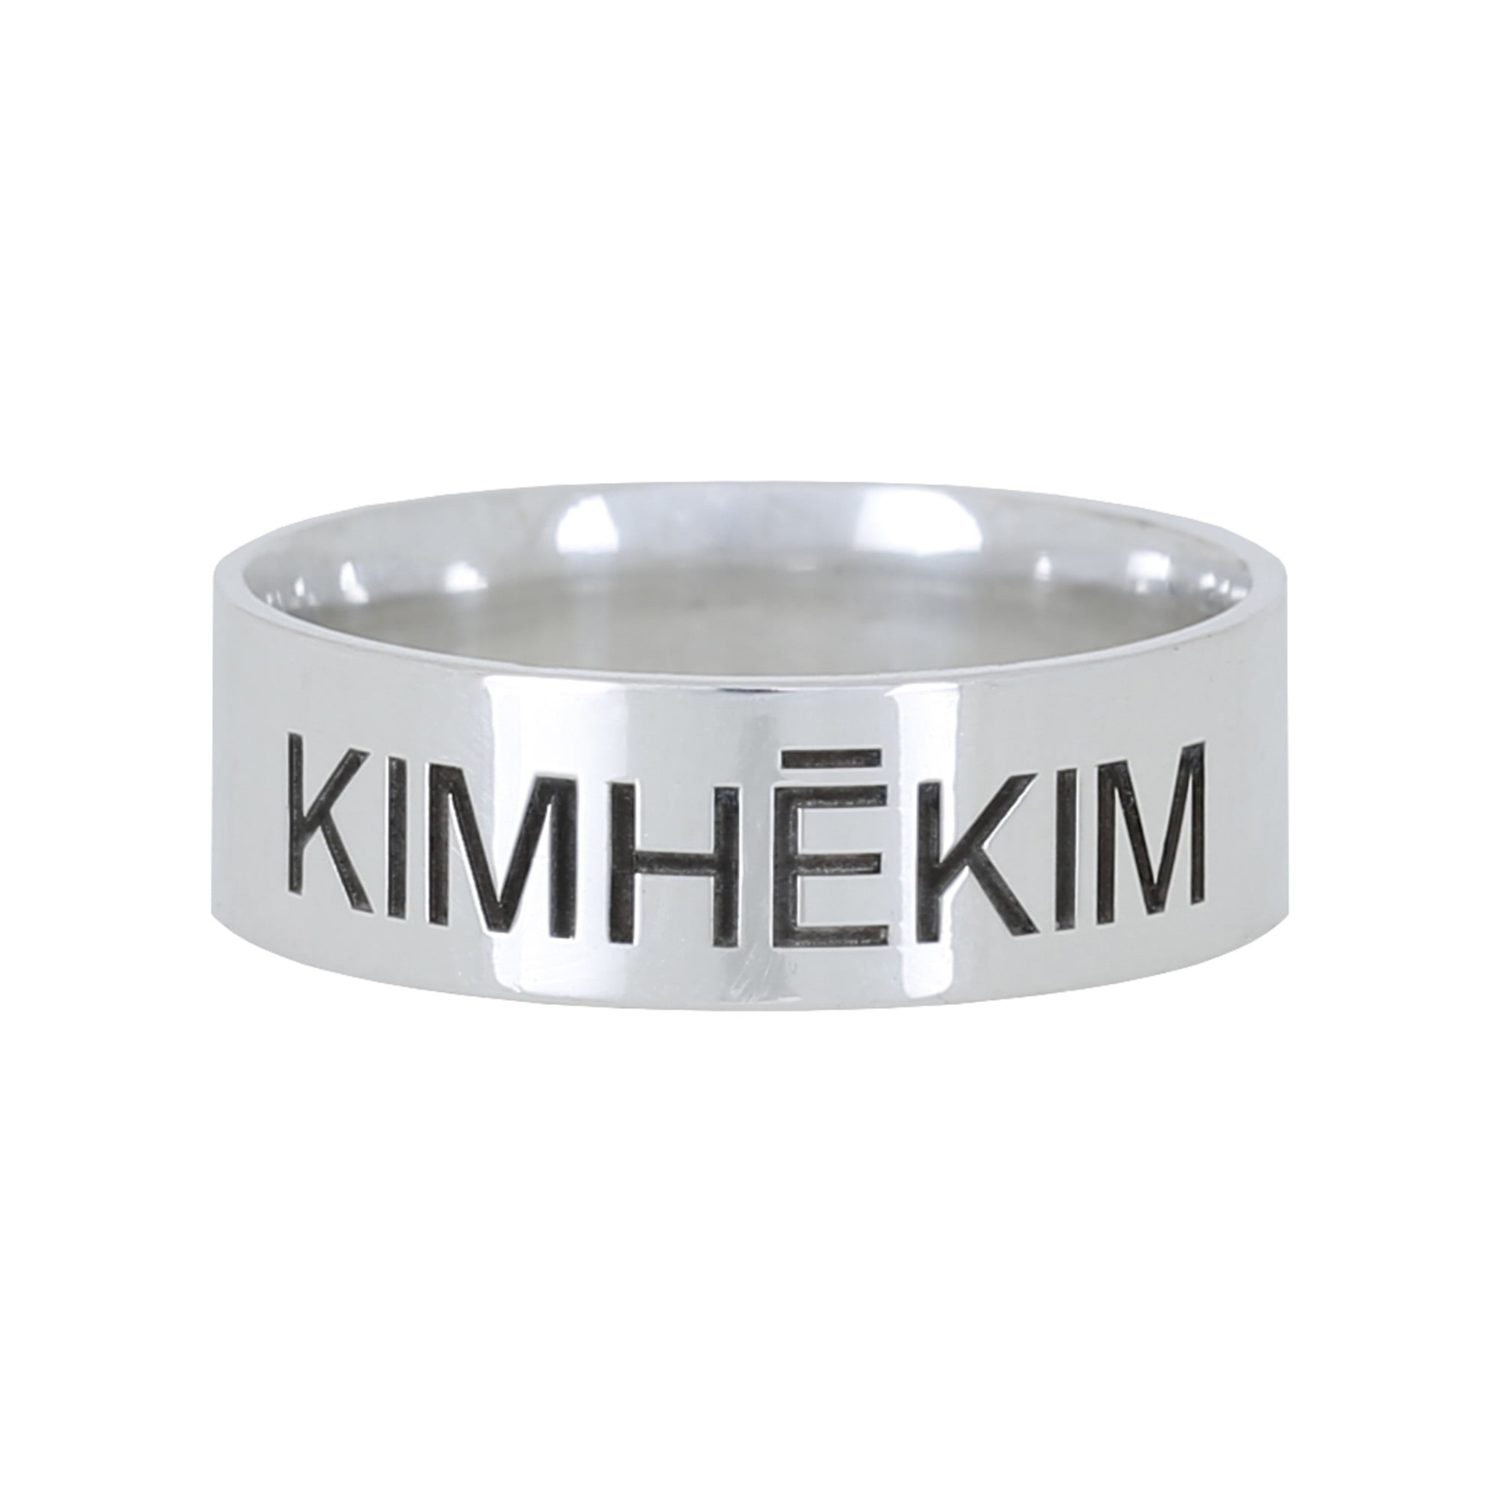 Kimhekim Logo Band Ring